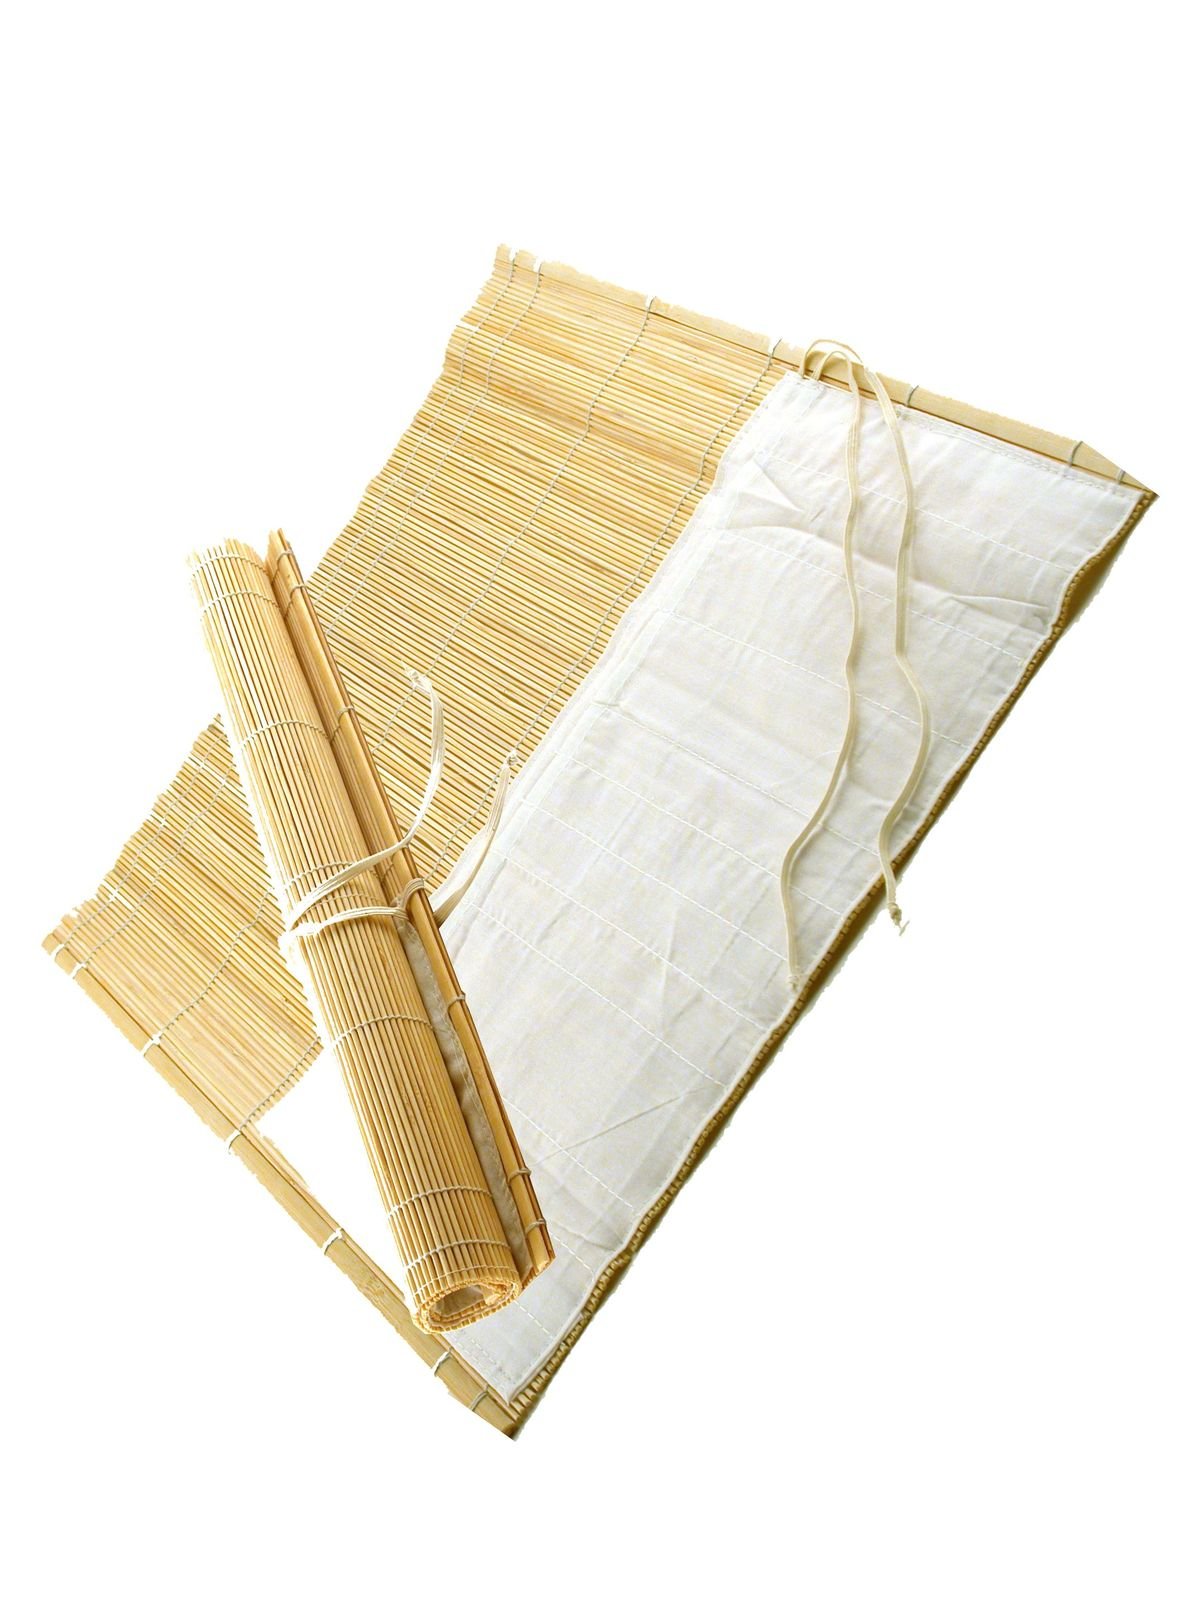 Jack Richeson Bamboo Brush Mat